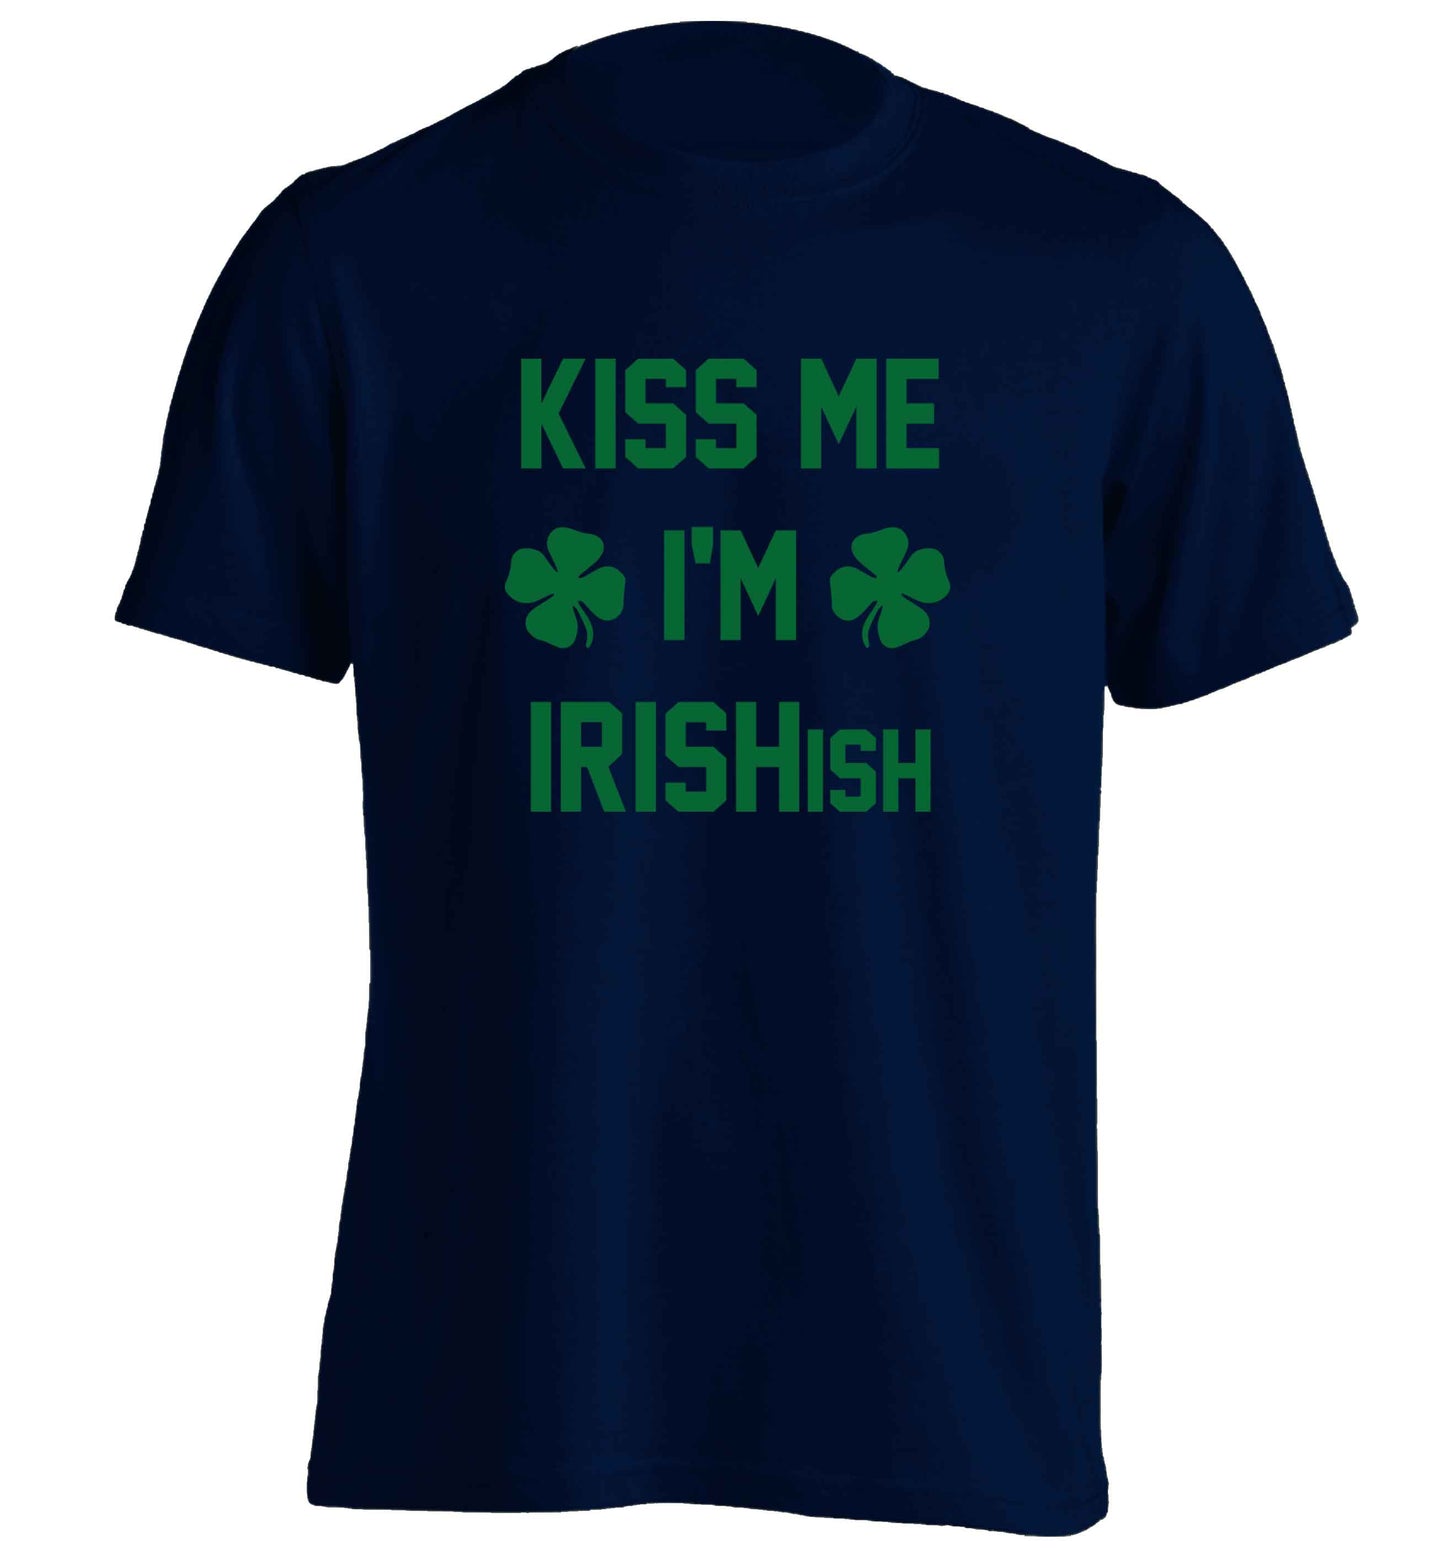 Kiss me I'm Irishish adults unisex navy Tshirt 2XL